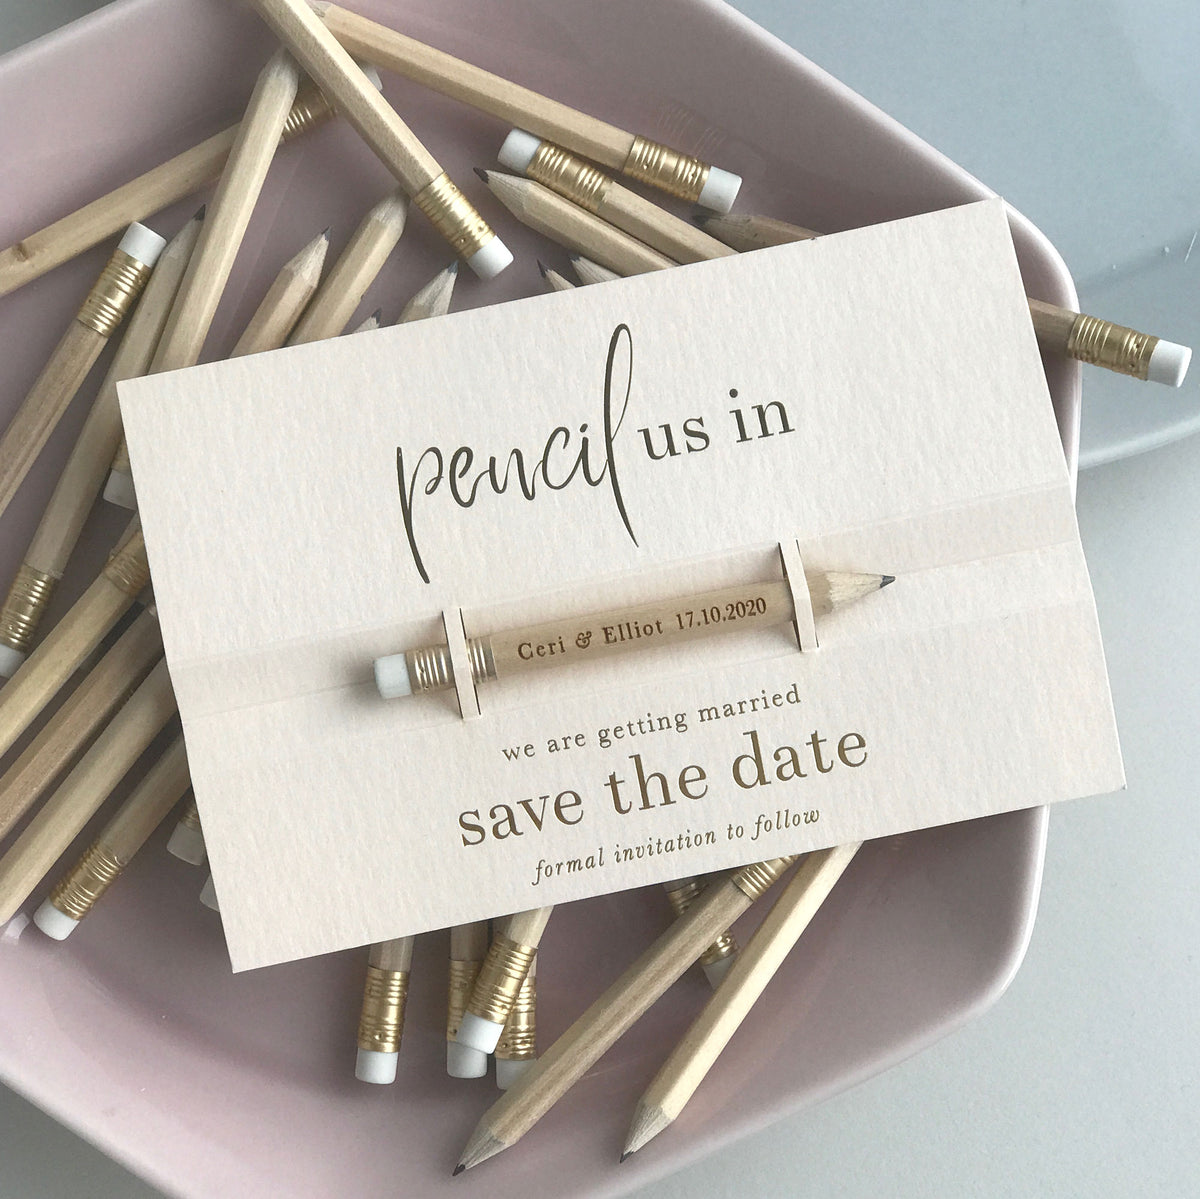 Reserve la fecha: llámenos en ✏ Tarjeta de boda en lámina real con sus nombres grabados